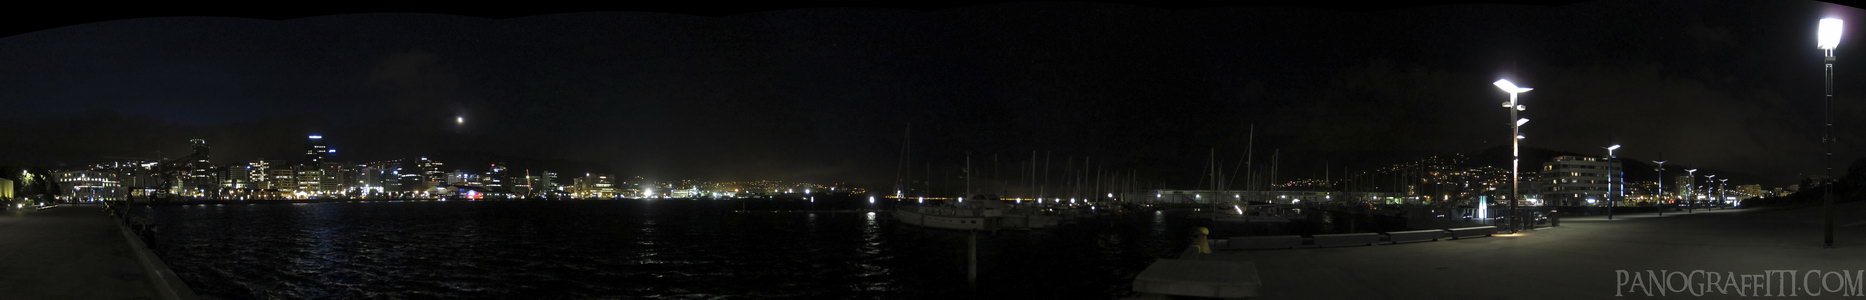 Wellington Harbor Night Shot - A view of Wellington CBD at night from the dock near Te Papa